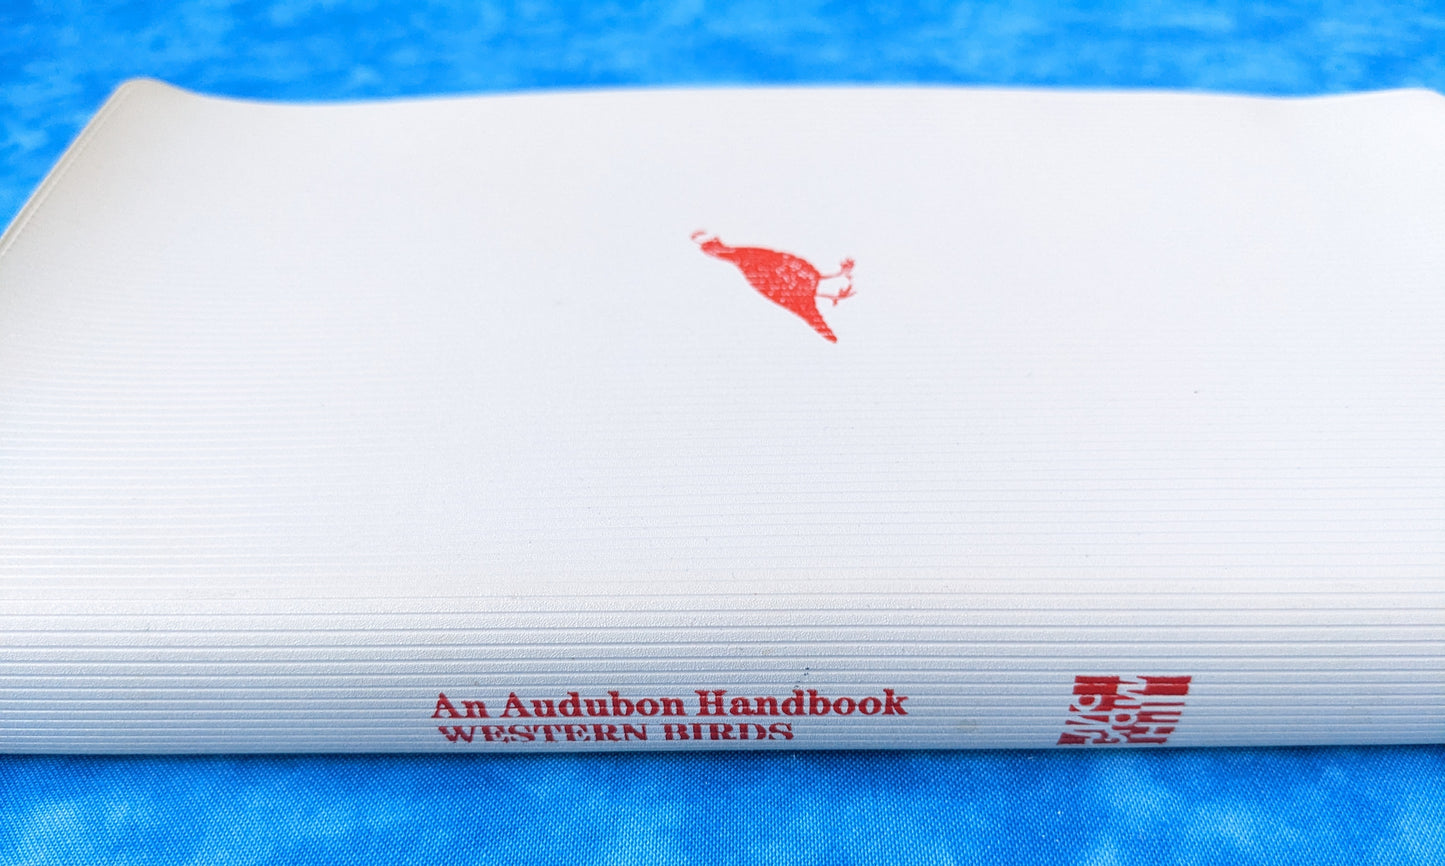 An Audubon Handbook: Western Birds vintage book ribbed spine